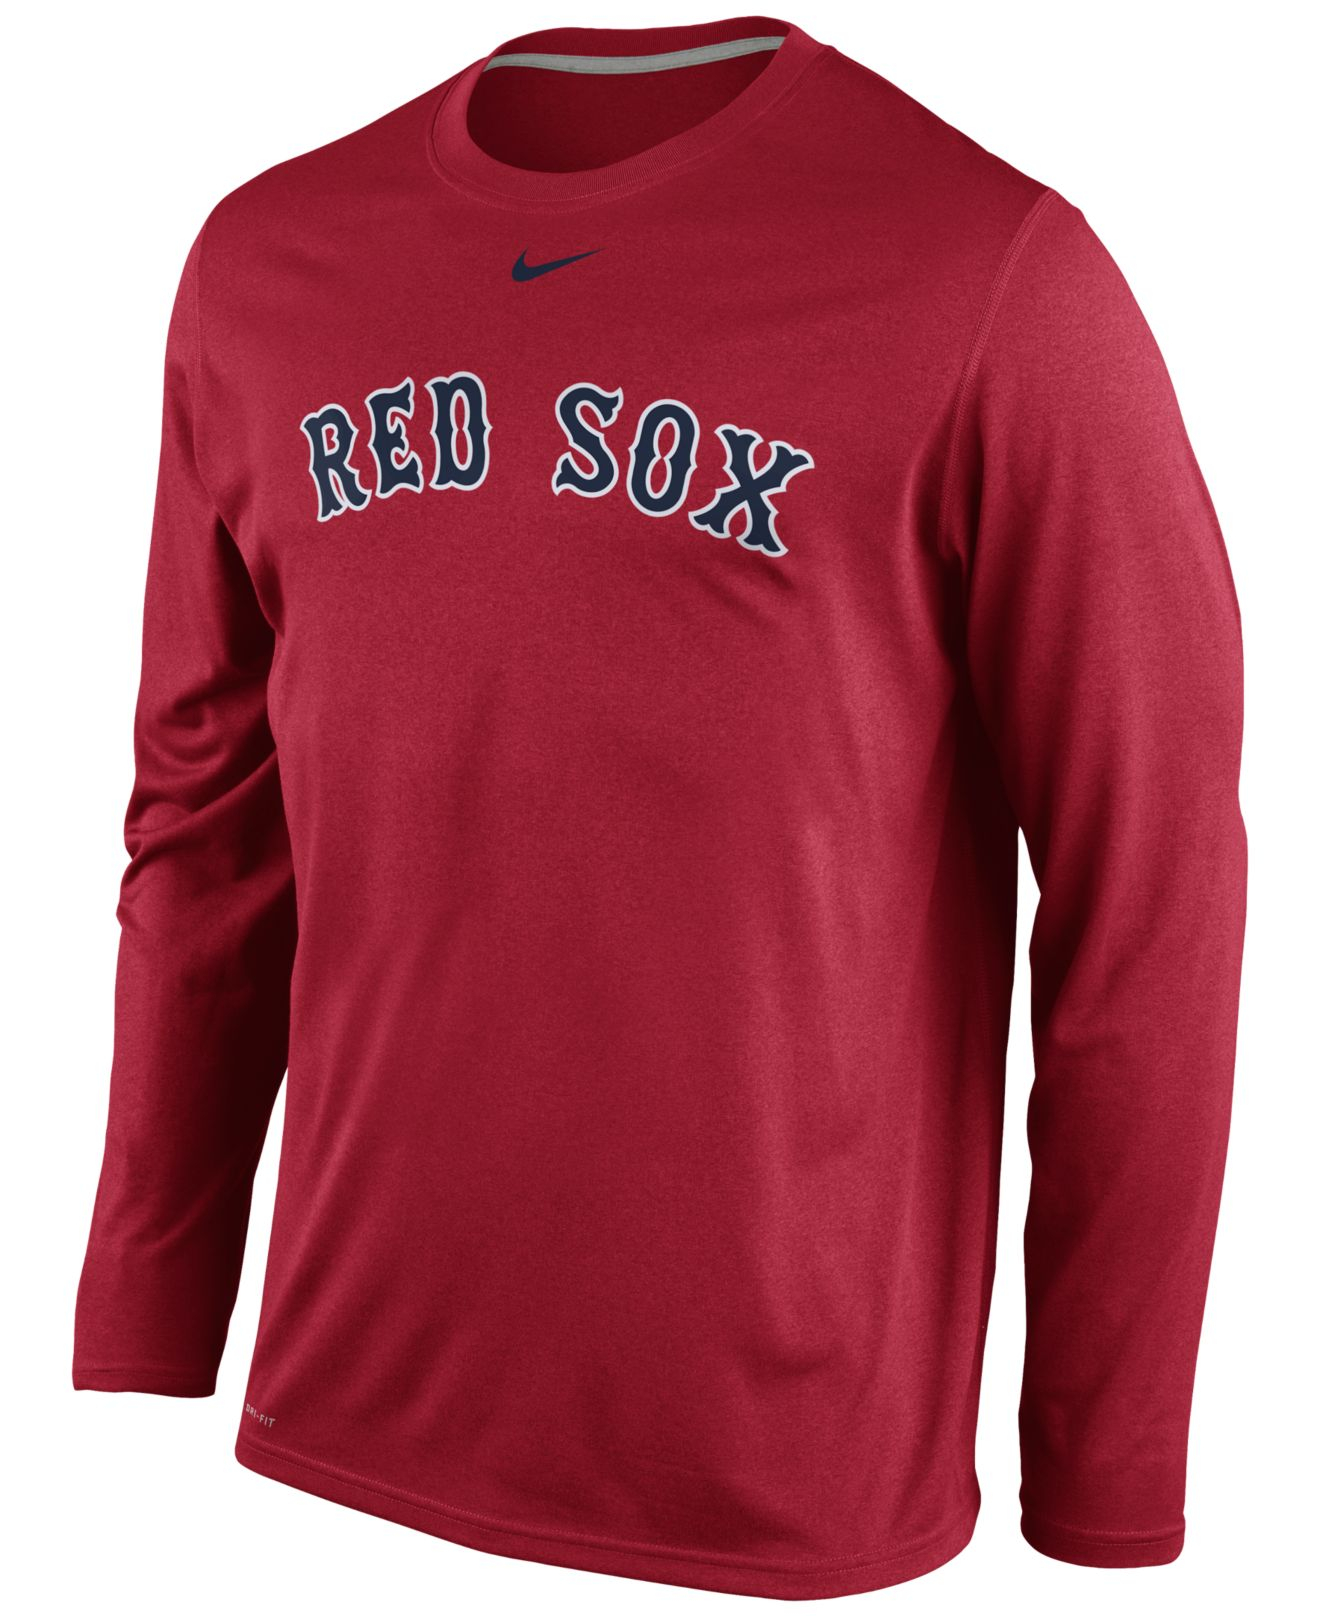 Lyst - Nike Men's Long-sleeve Boston Red Sox Legend T-shirt in Red for Men